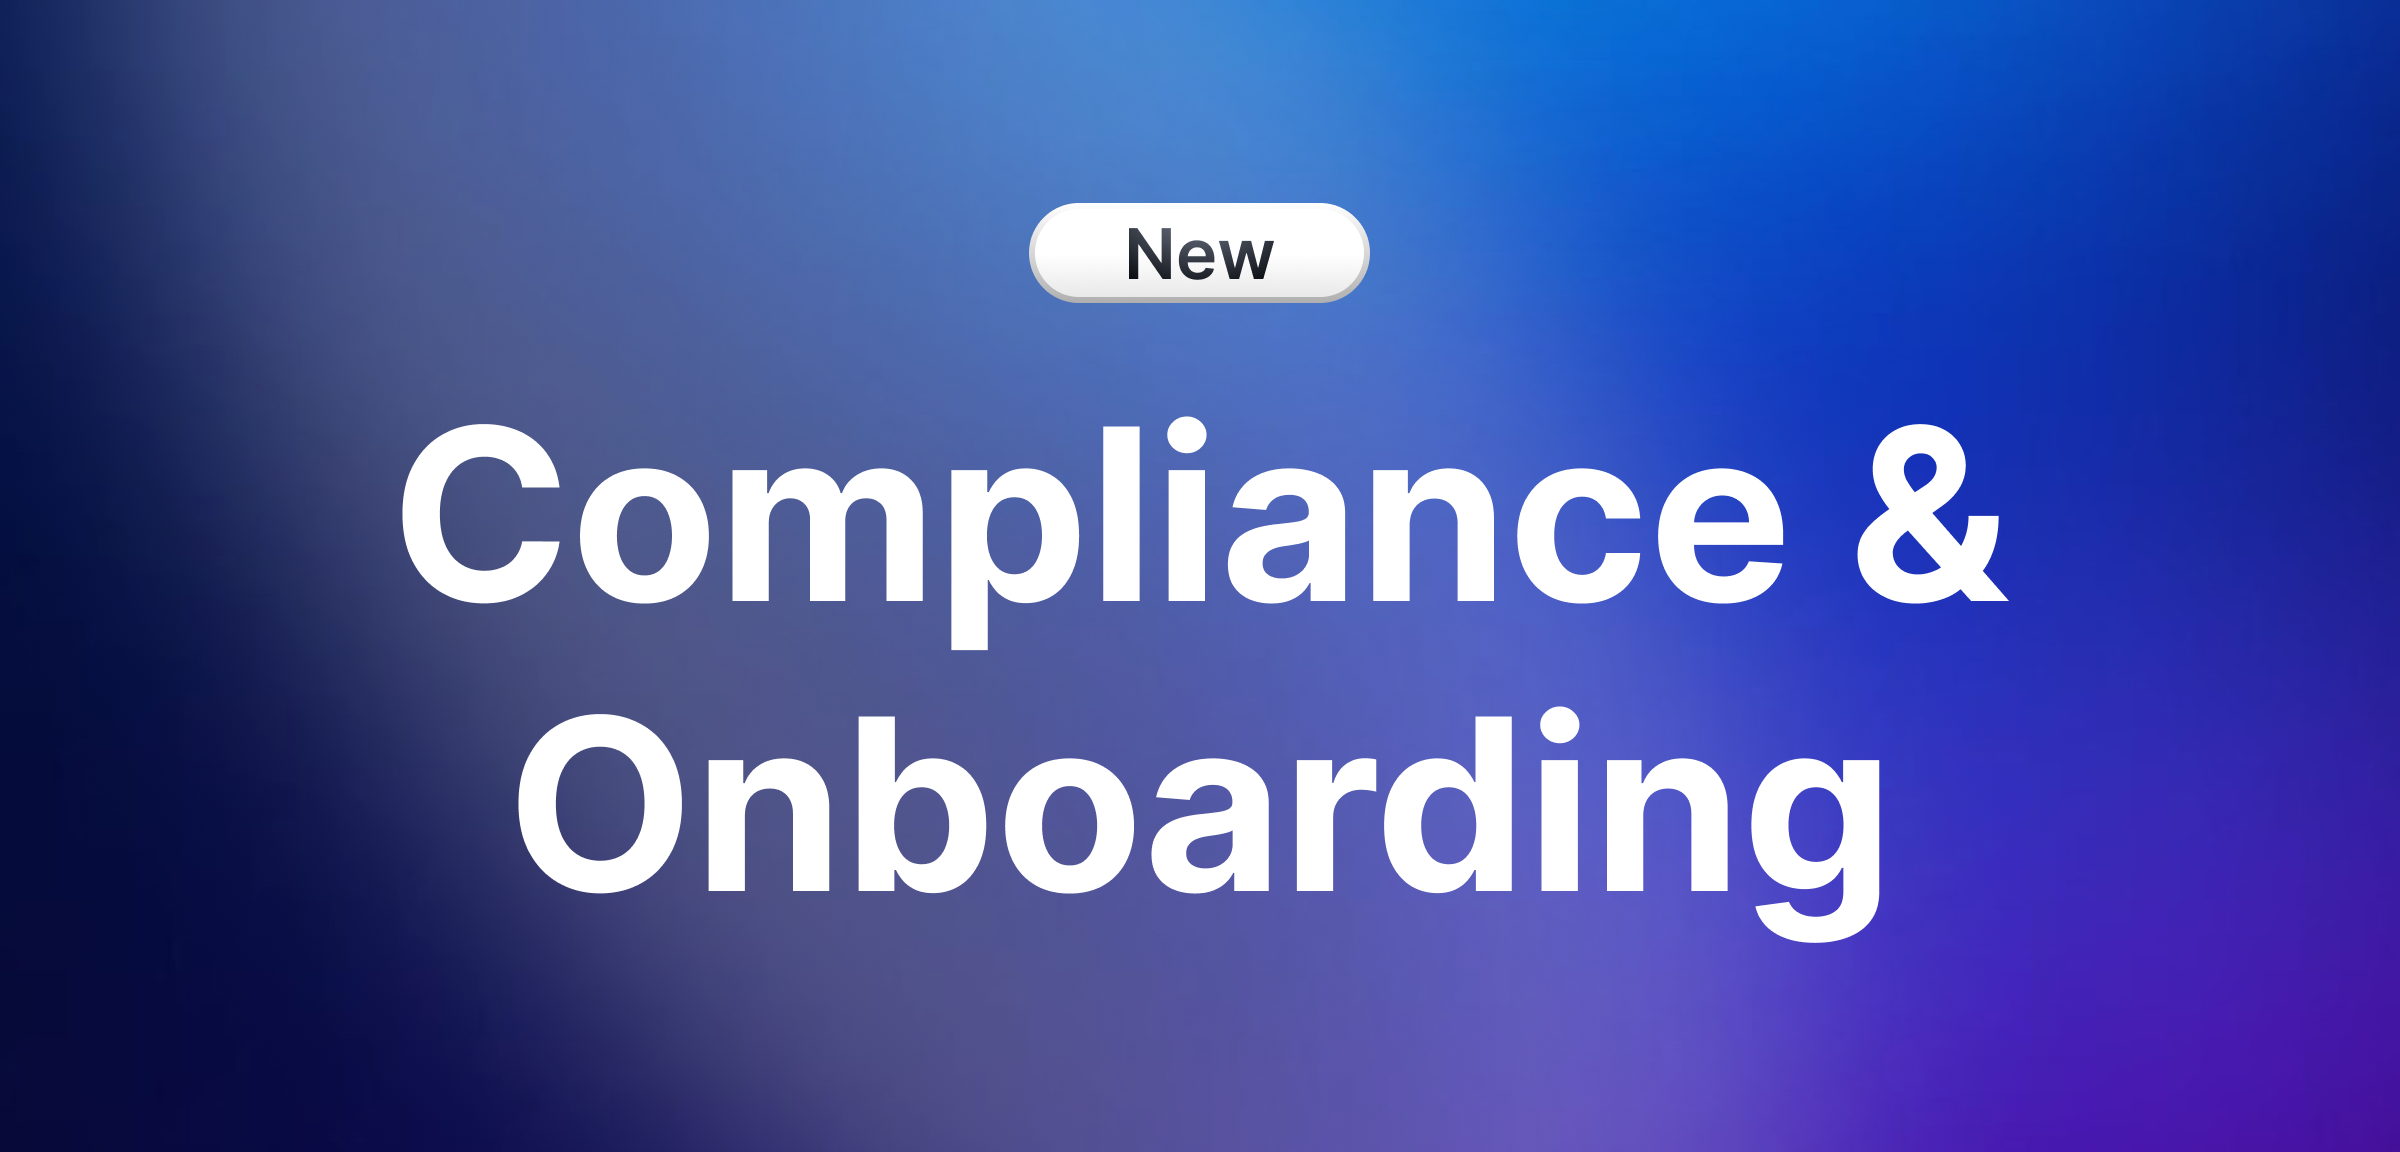 New: Onboarding & Compliance